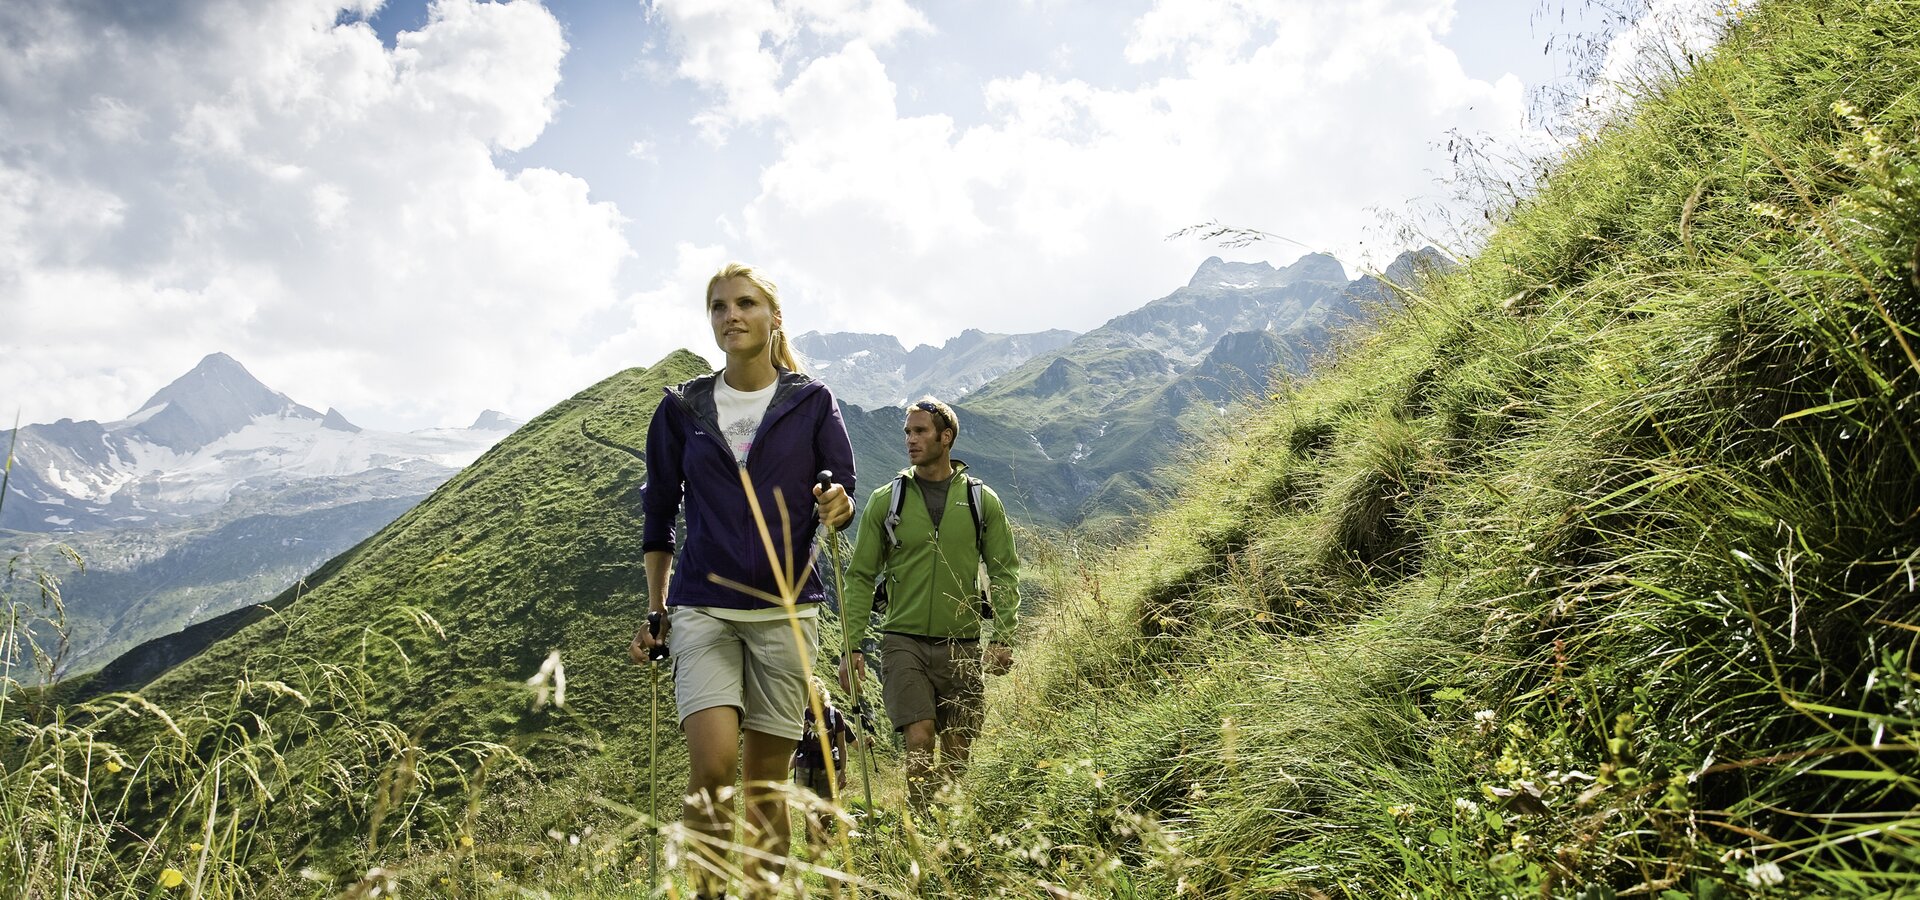 Kitzsteinhorn offers a wide range of mountain adventures and hiking possibilities | © Kitzsteinhorn